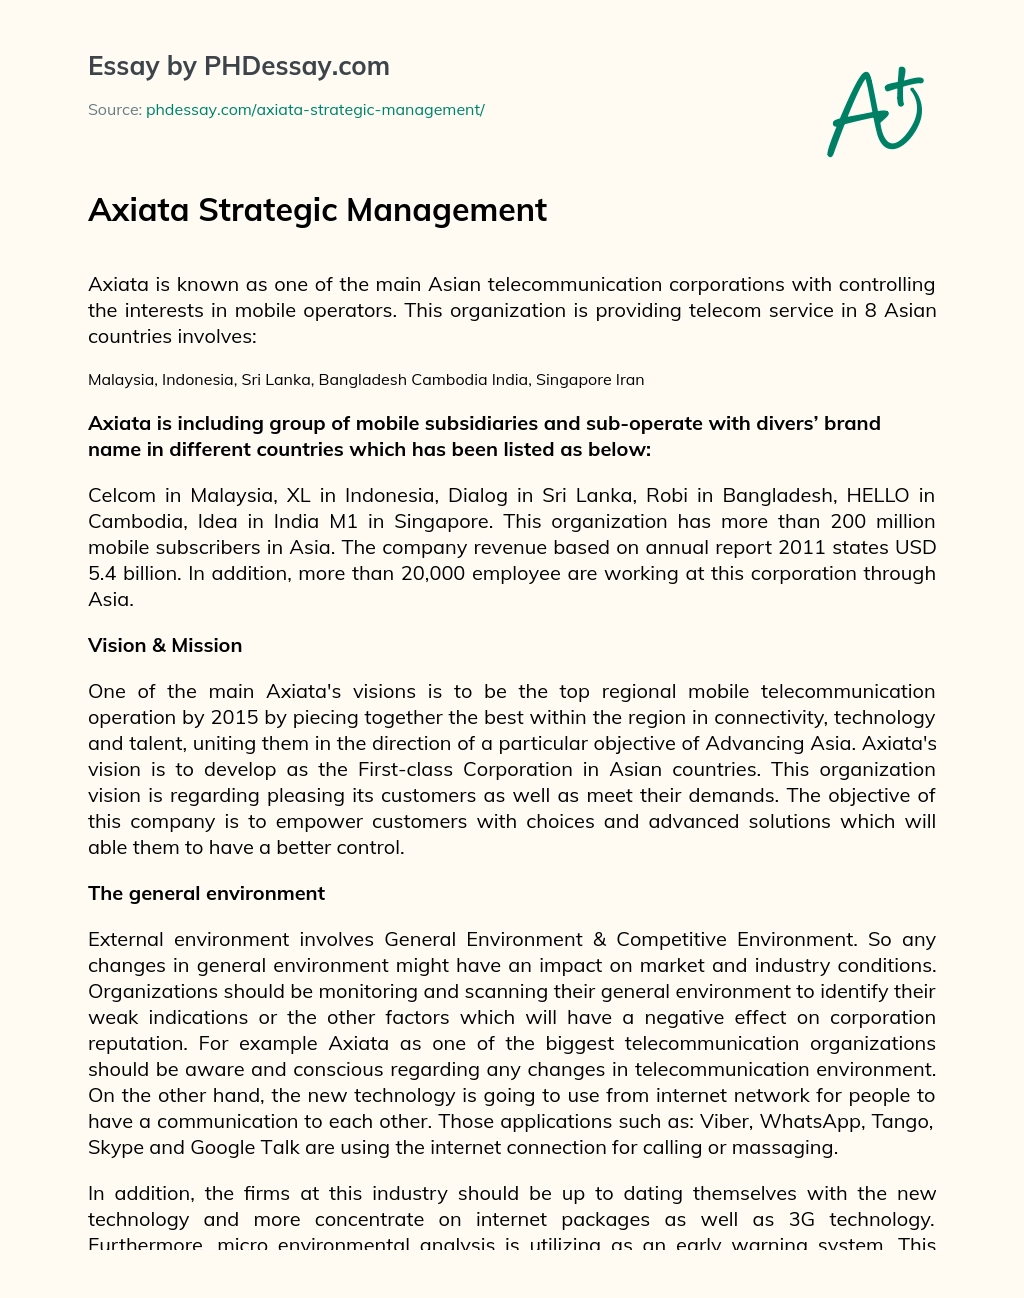 Axiata Strategic Management essay